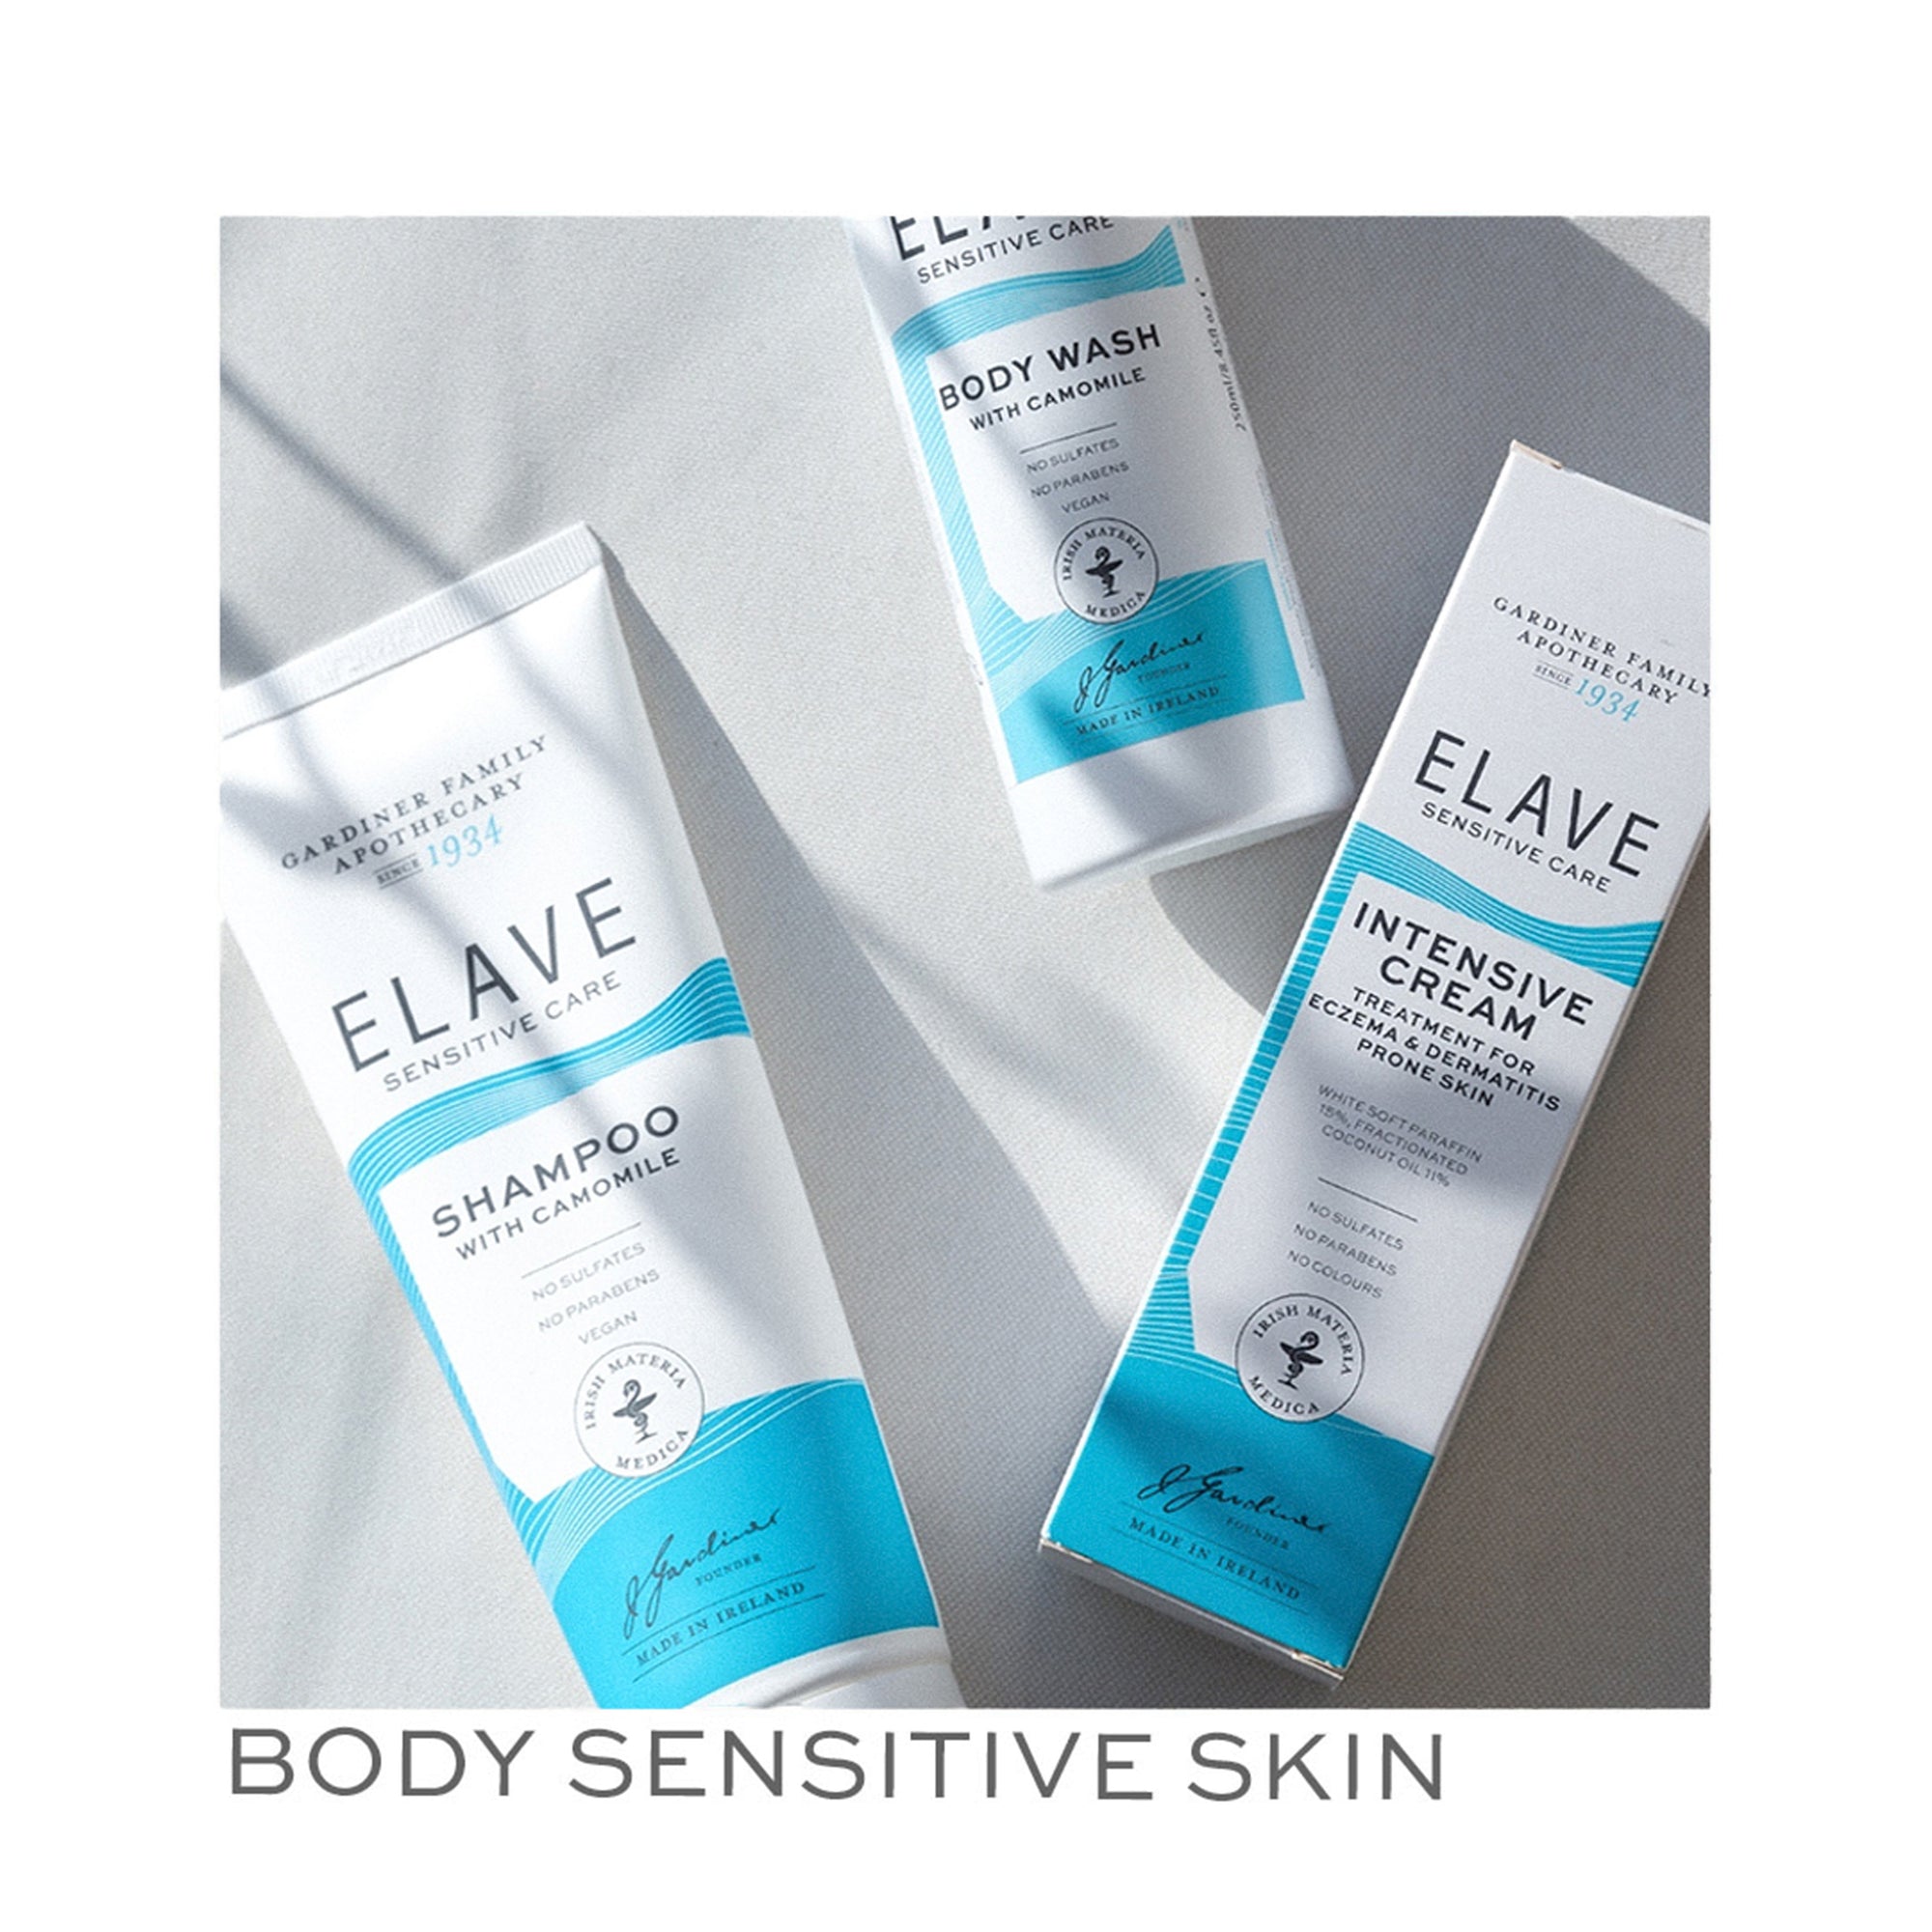 Elave Body Sensitive Skin Regime